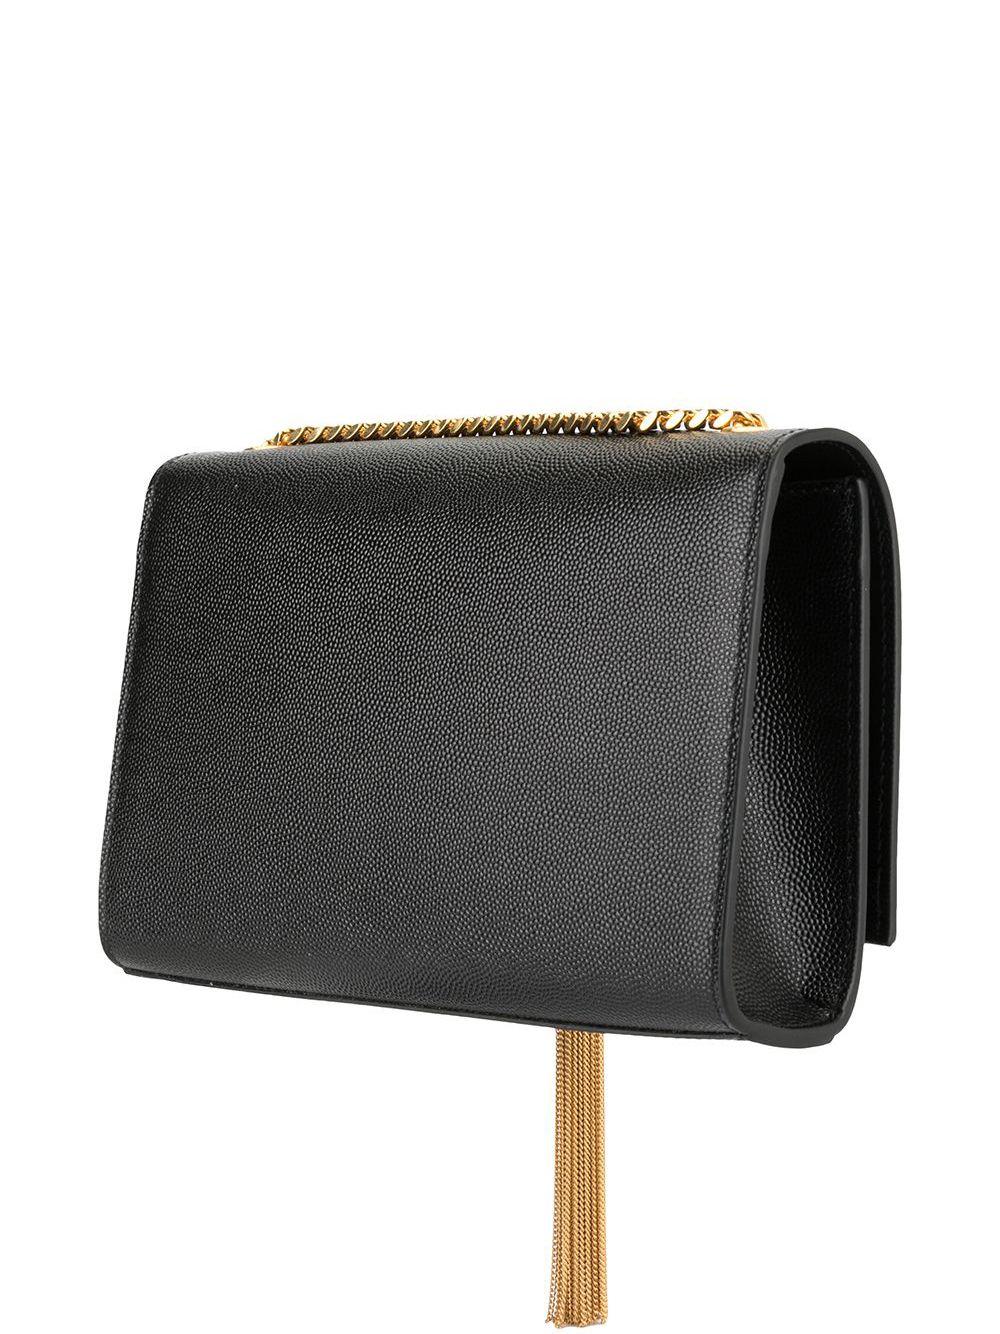 Stylish Leather Shoulder Handbag for Women in Nero